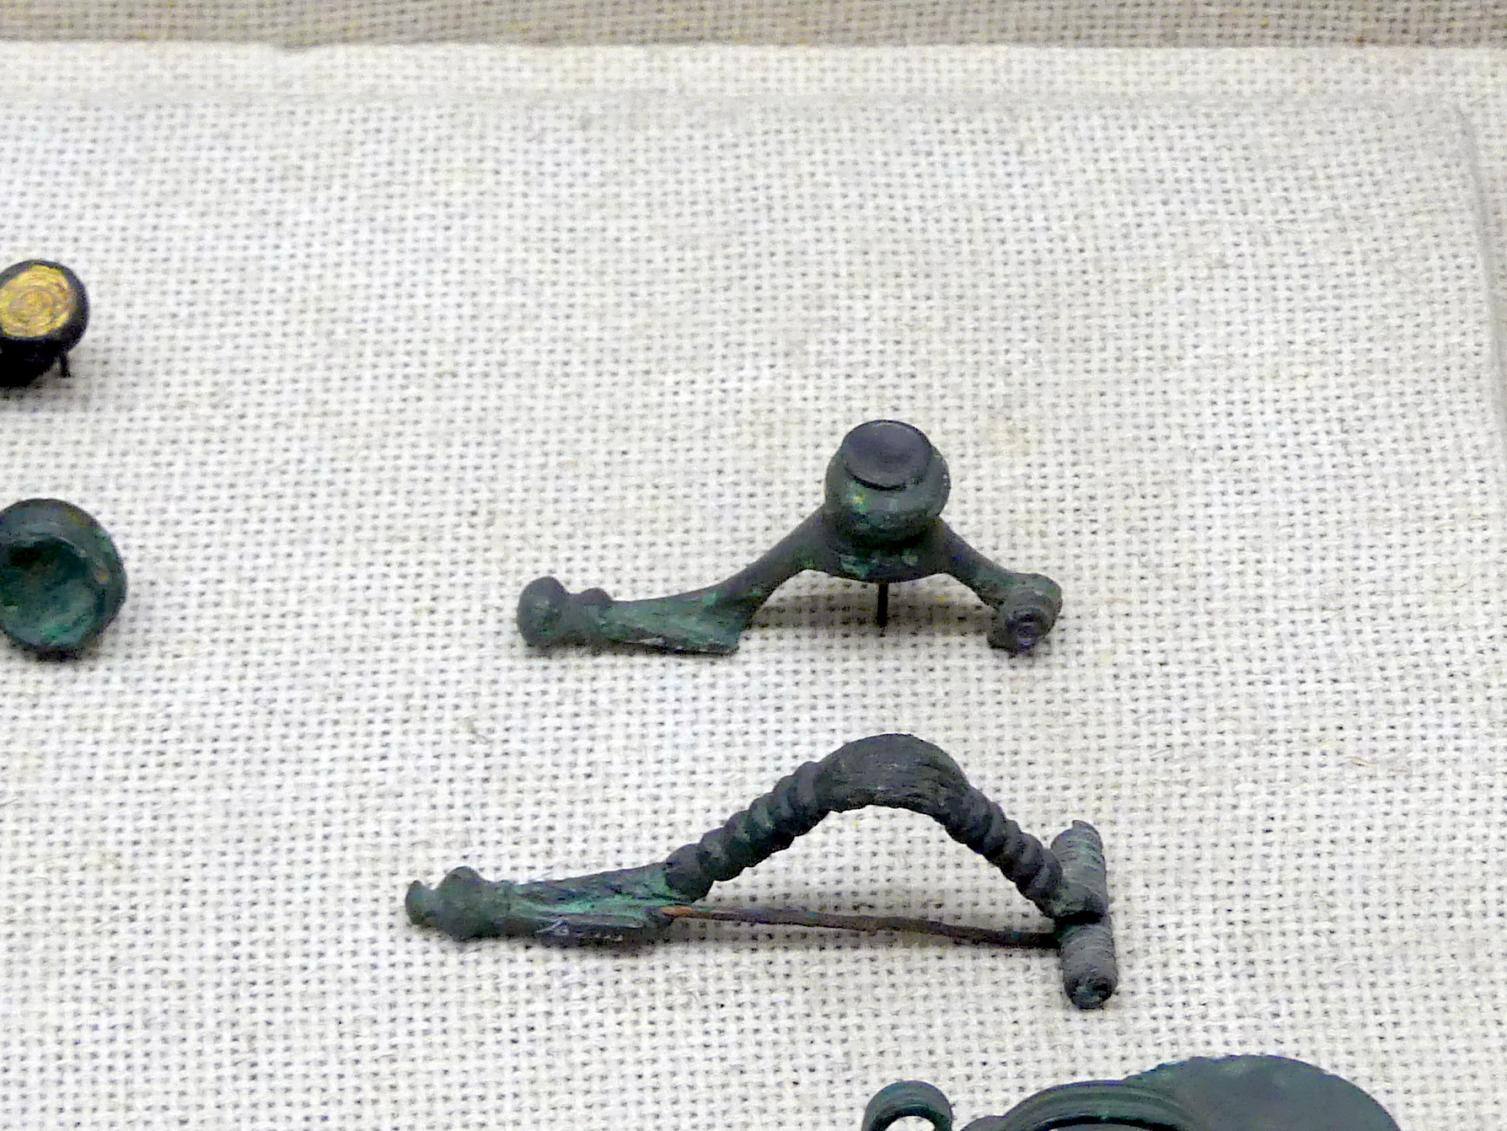 Paukenfibel, Hallstattzeit, 700 - 200 v. Chr., Bild 1/2